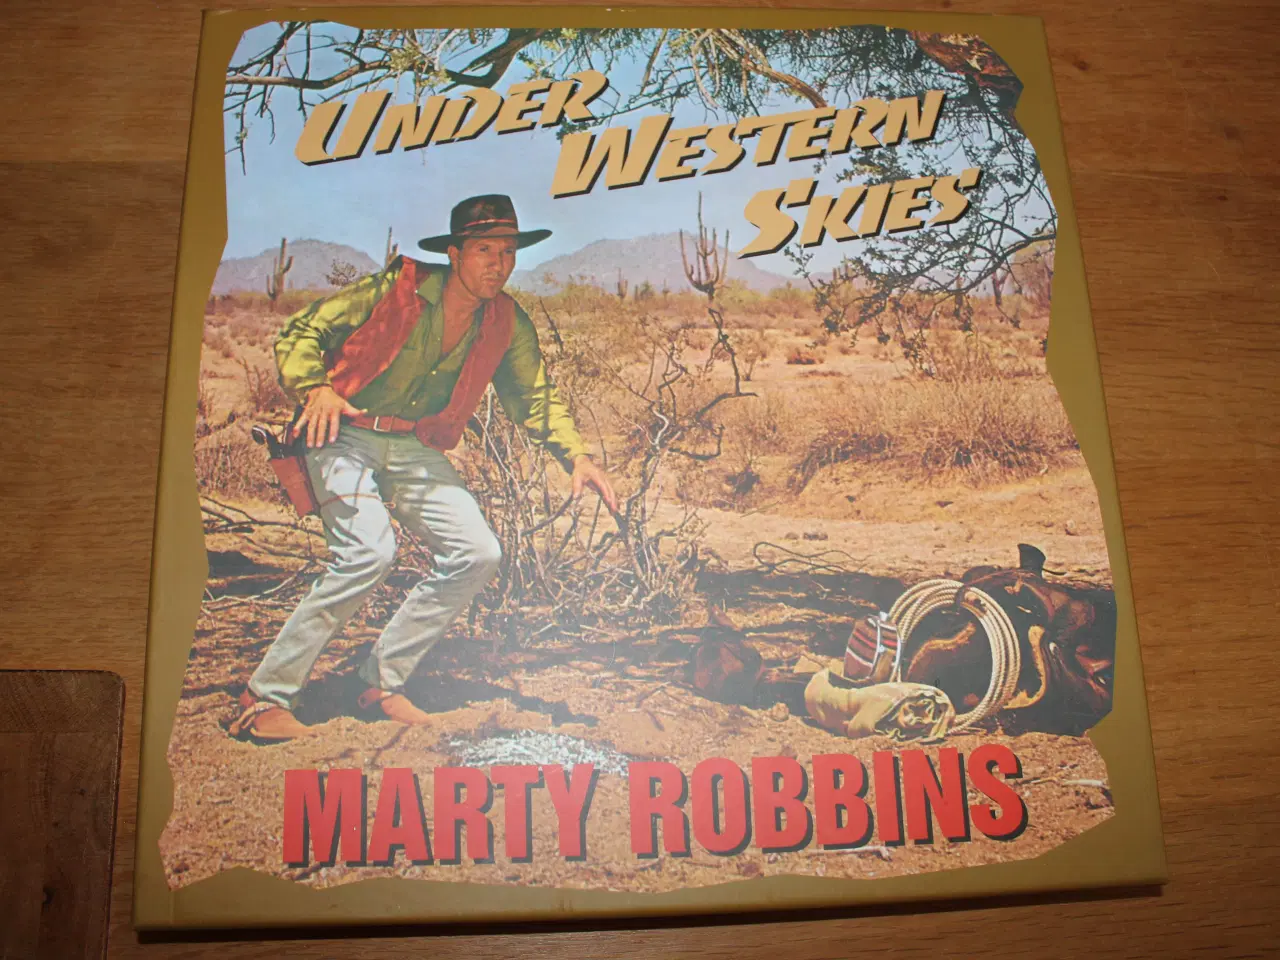 Billede 1 - MARTY ROBBINS - 4 CD'er: Under Western Skies